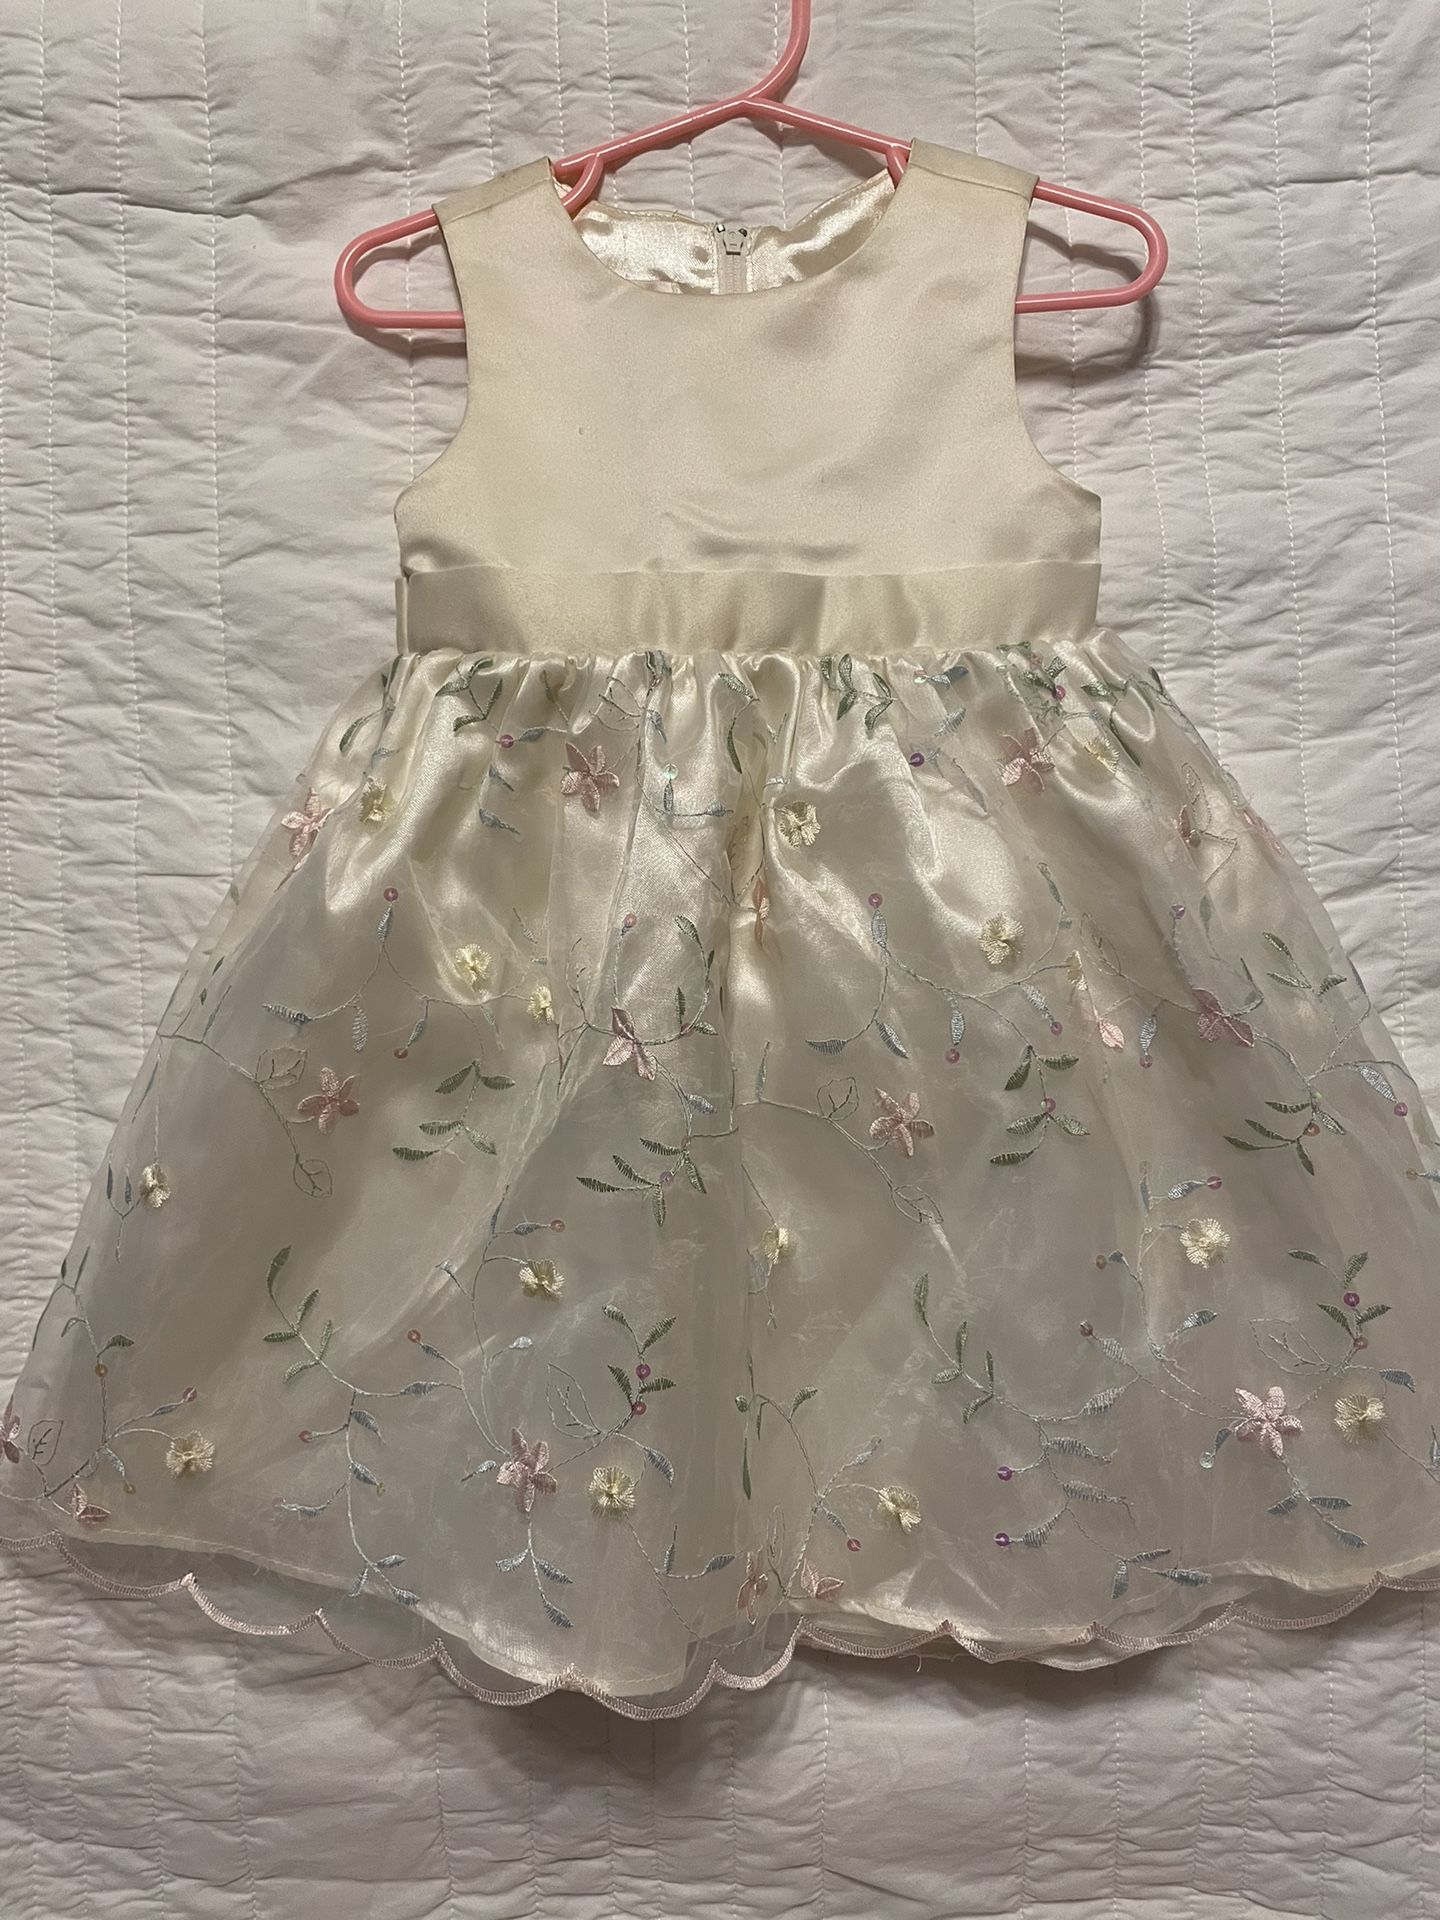 American Princess Cream Satin Formal Toddler Dress Size 2T